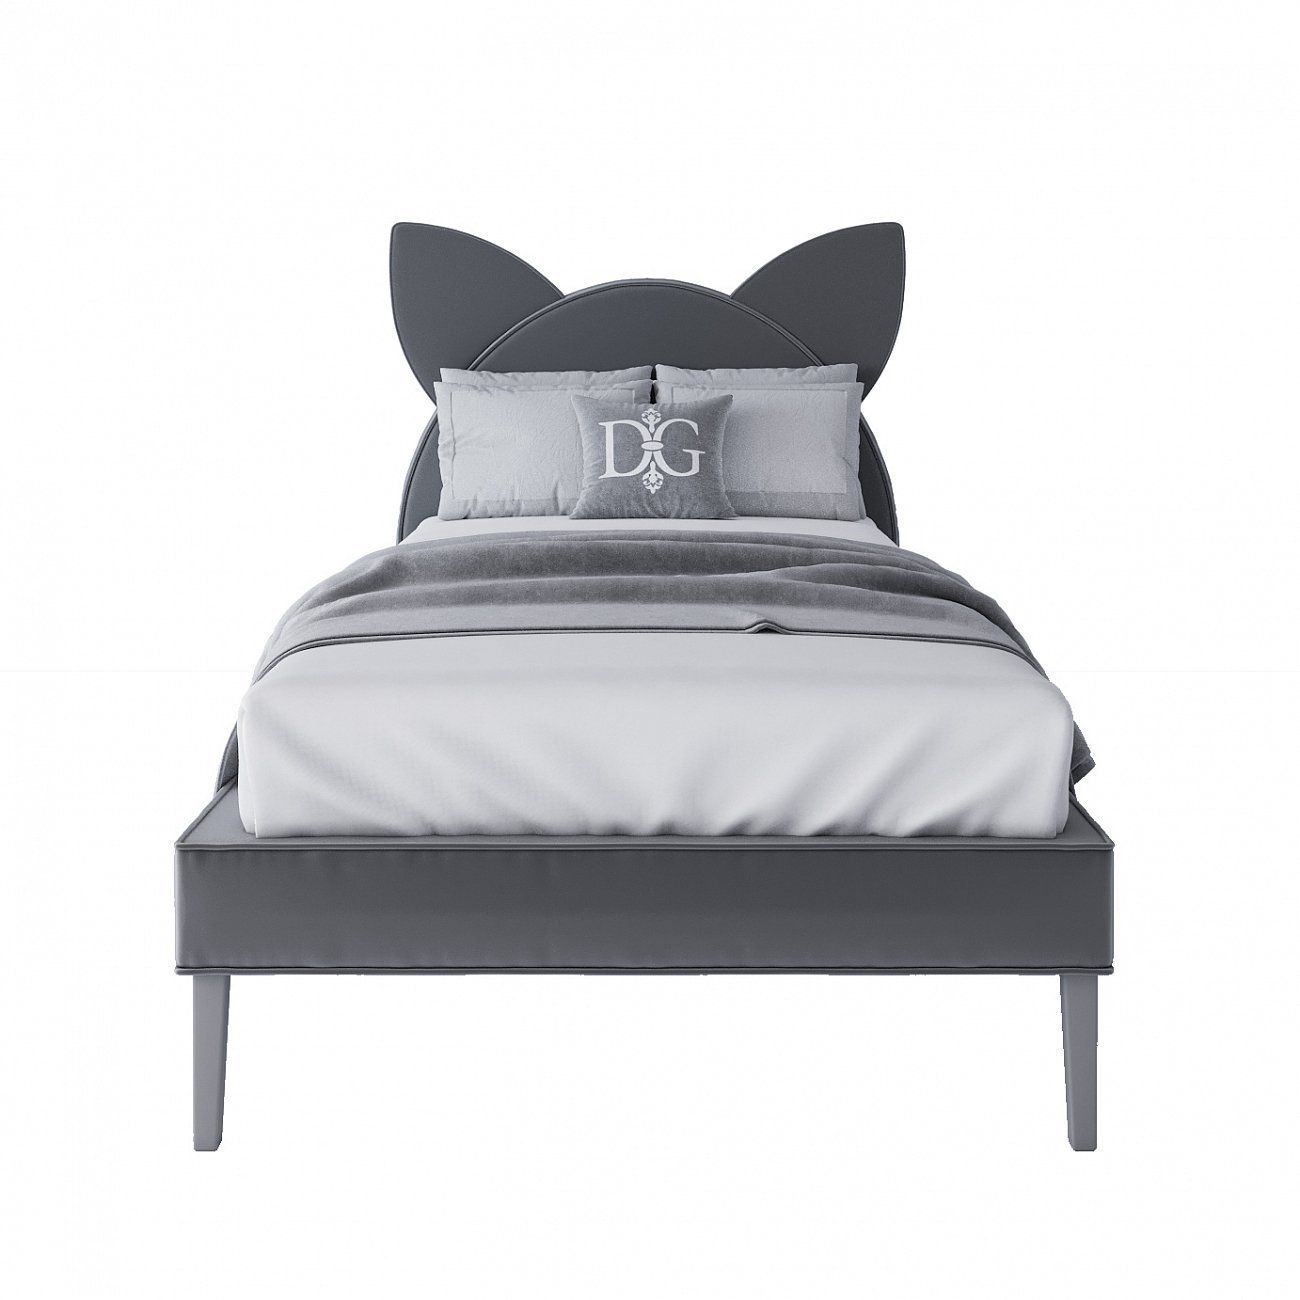 Kitty single bed for children 90x200 cm gray